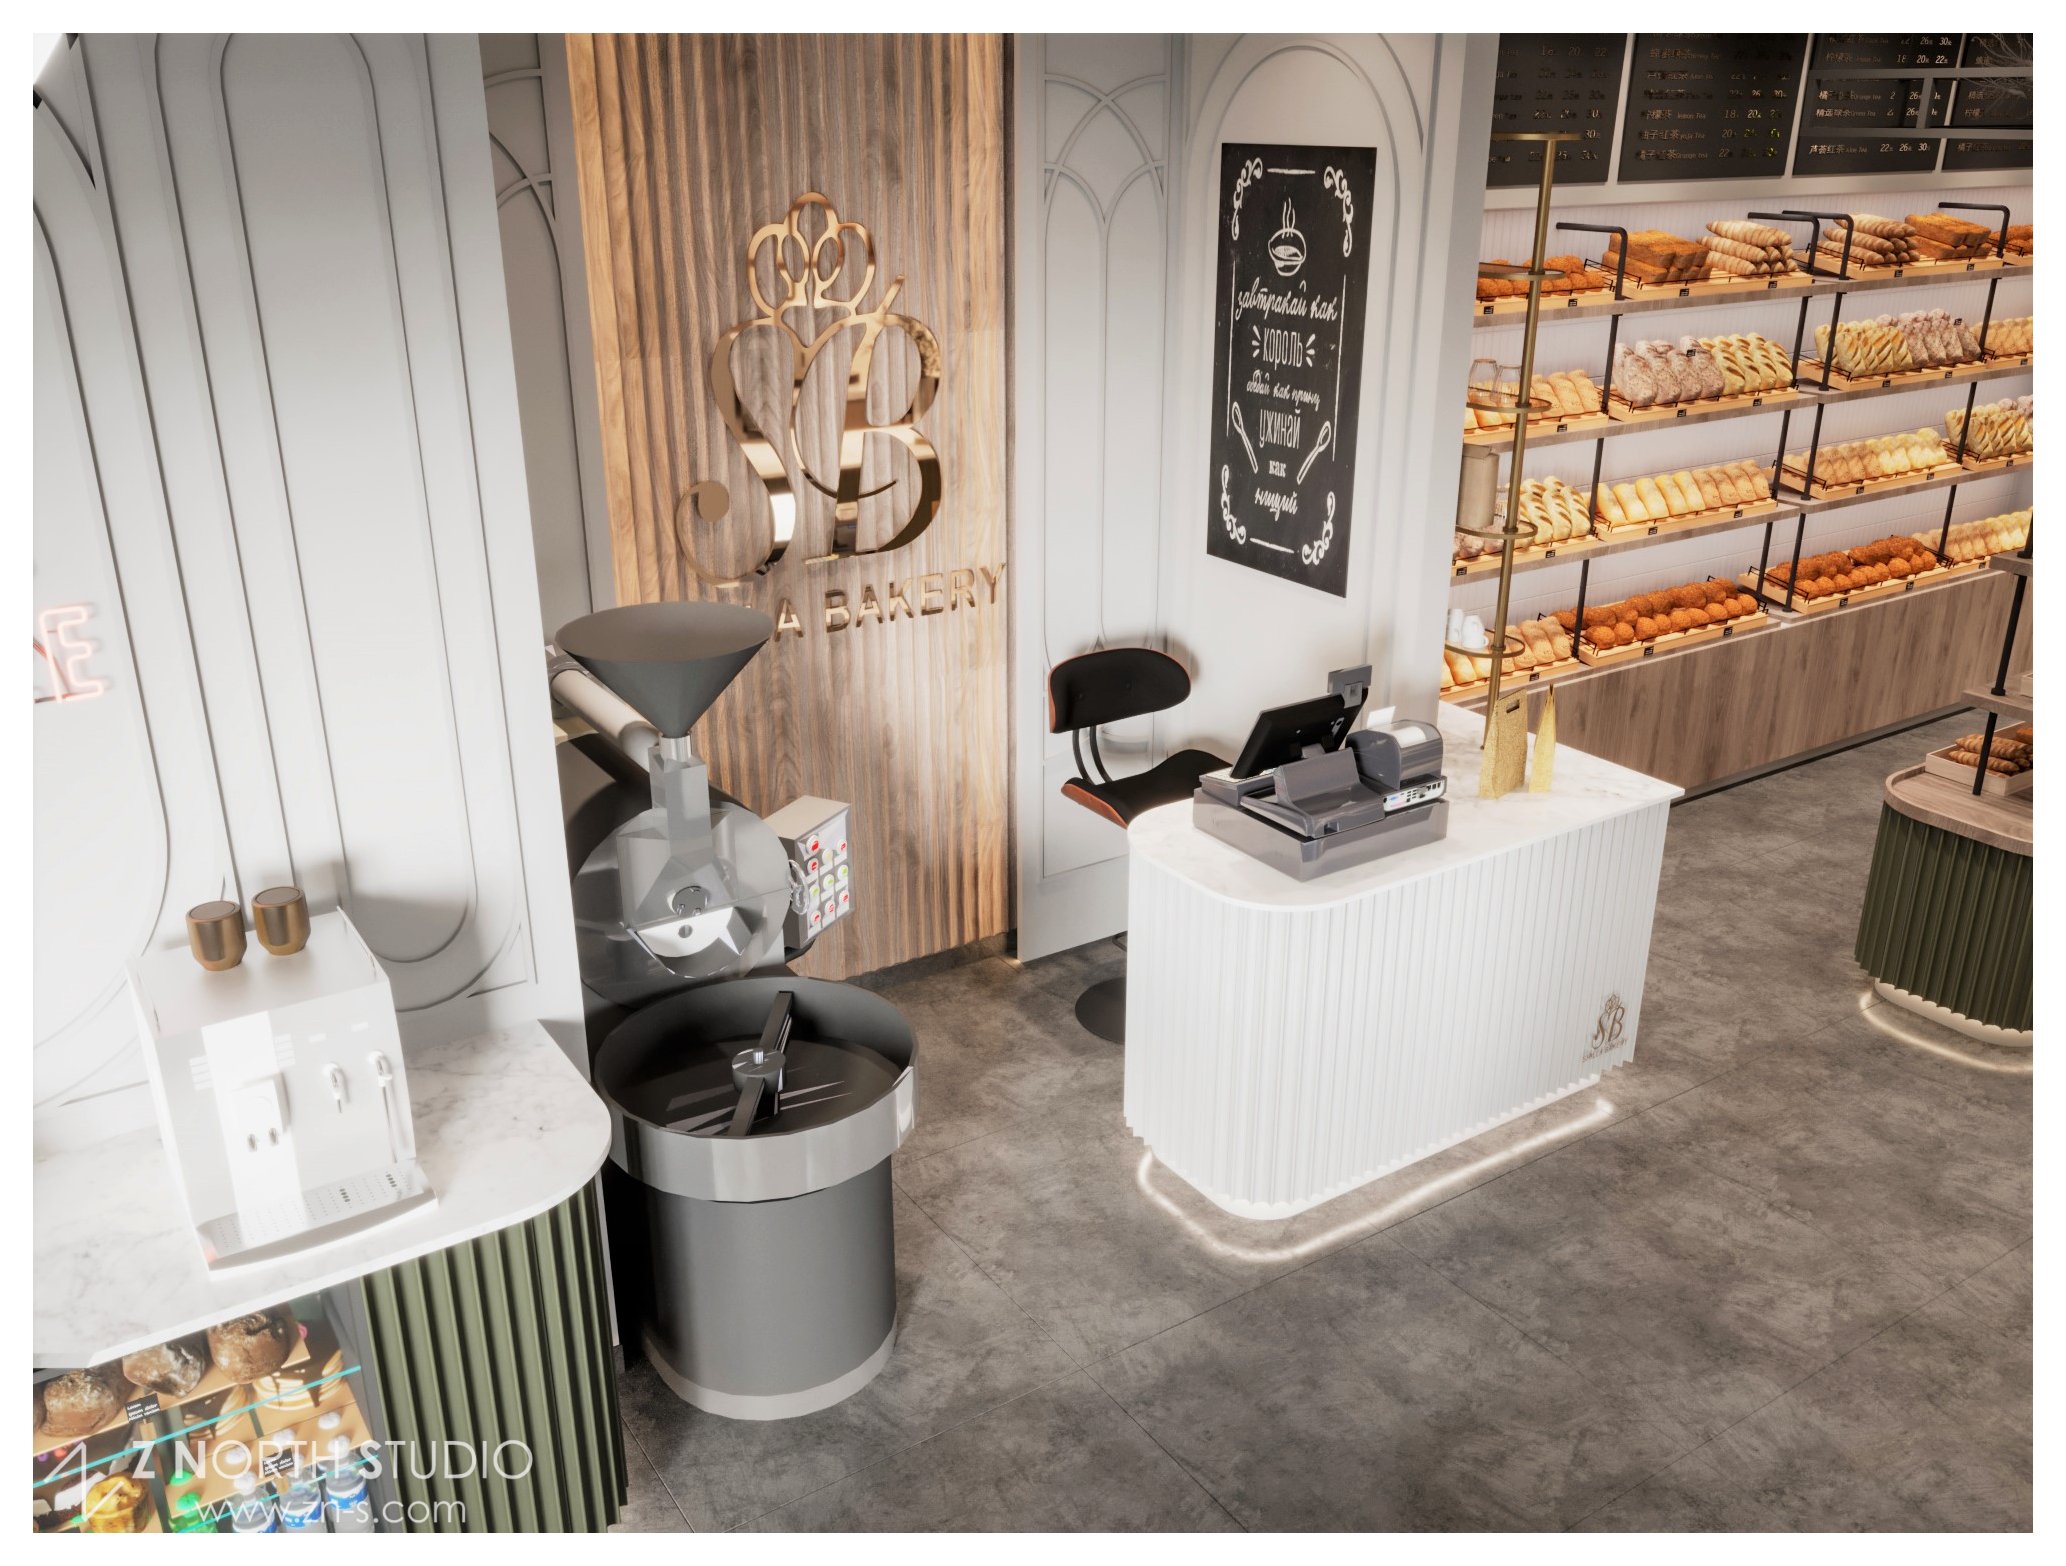 shilla bakery usa interior design z north Studio dc (8).jpg